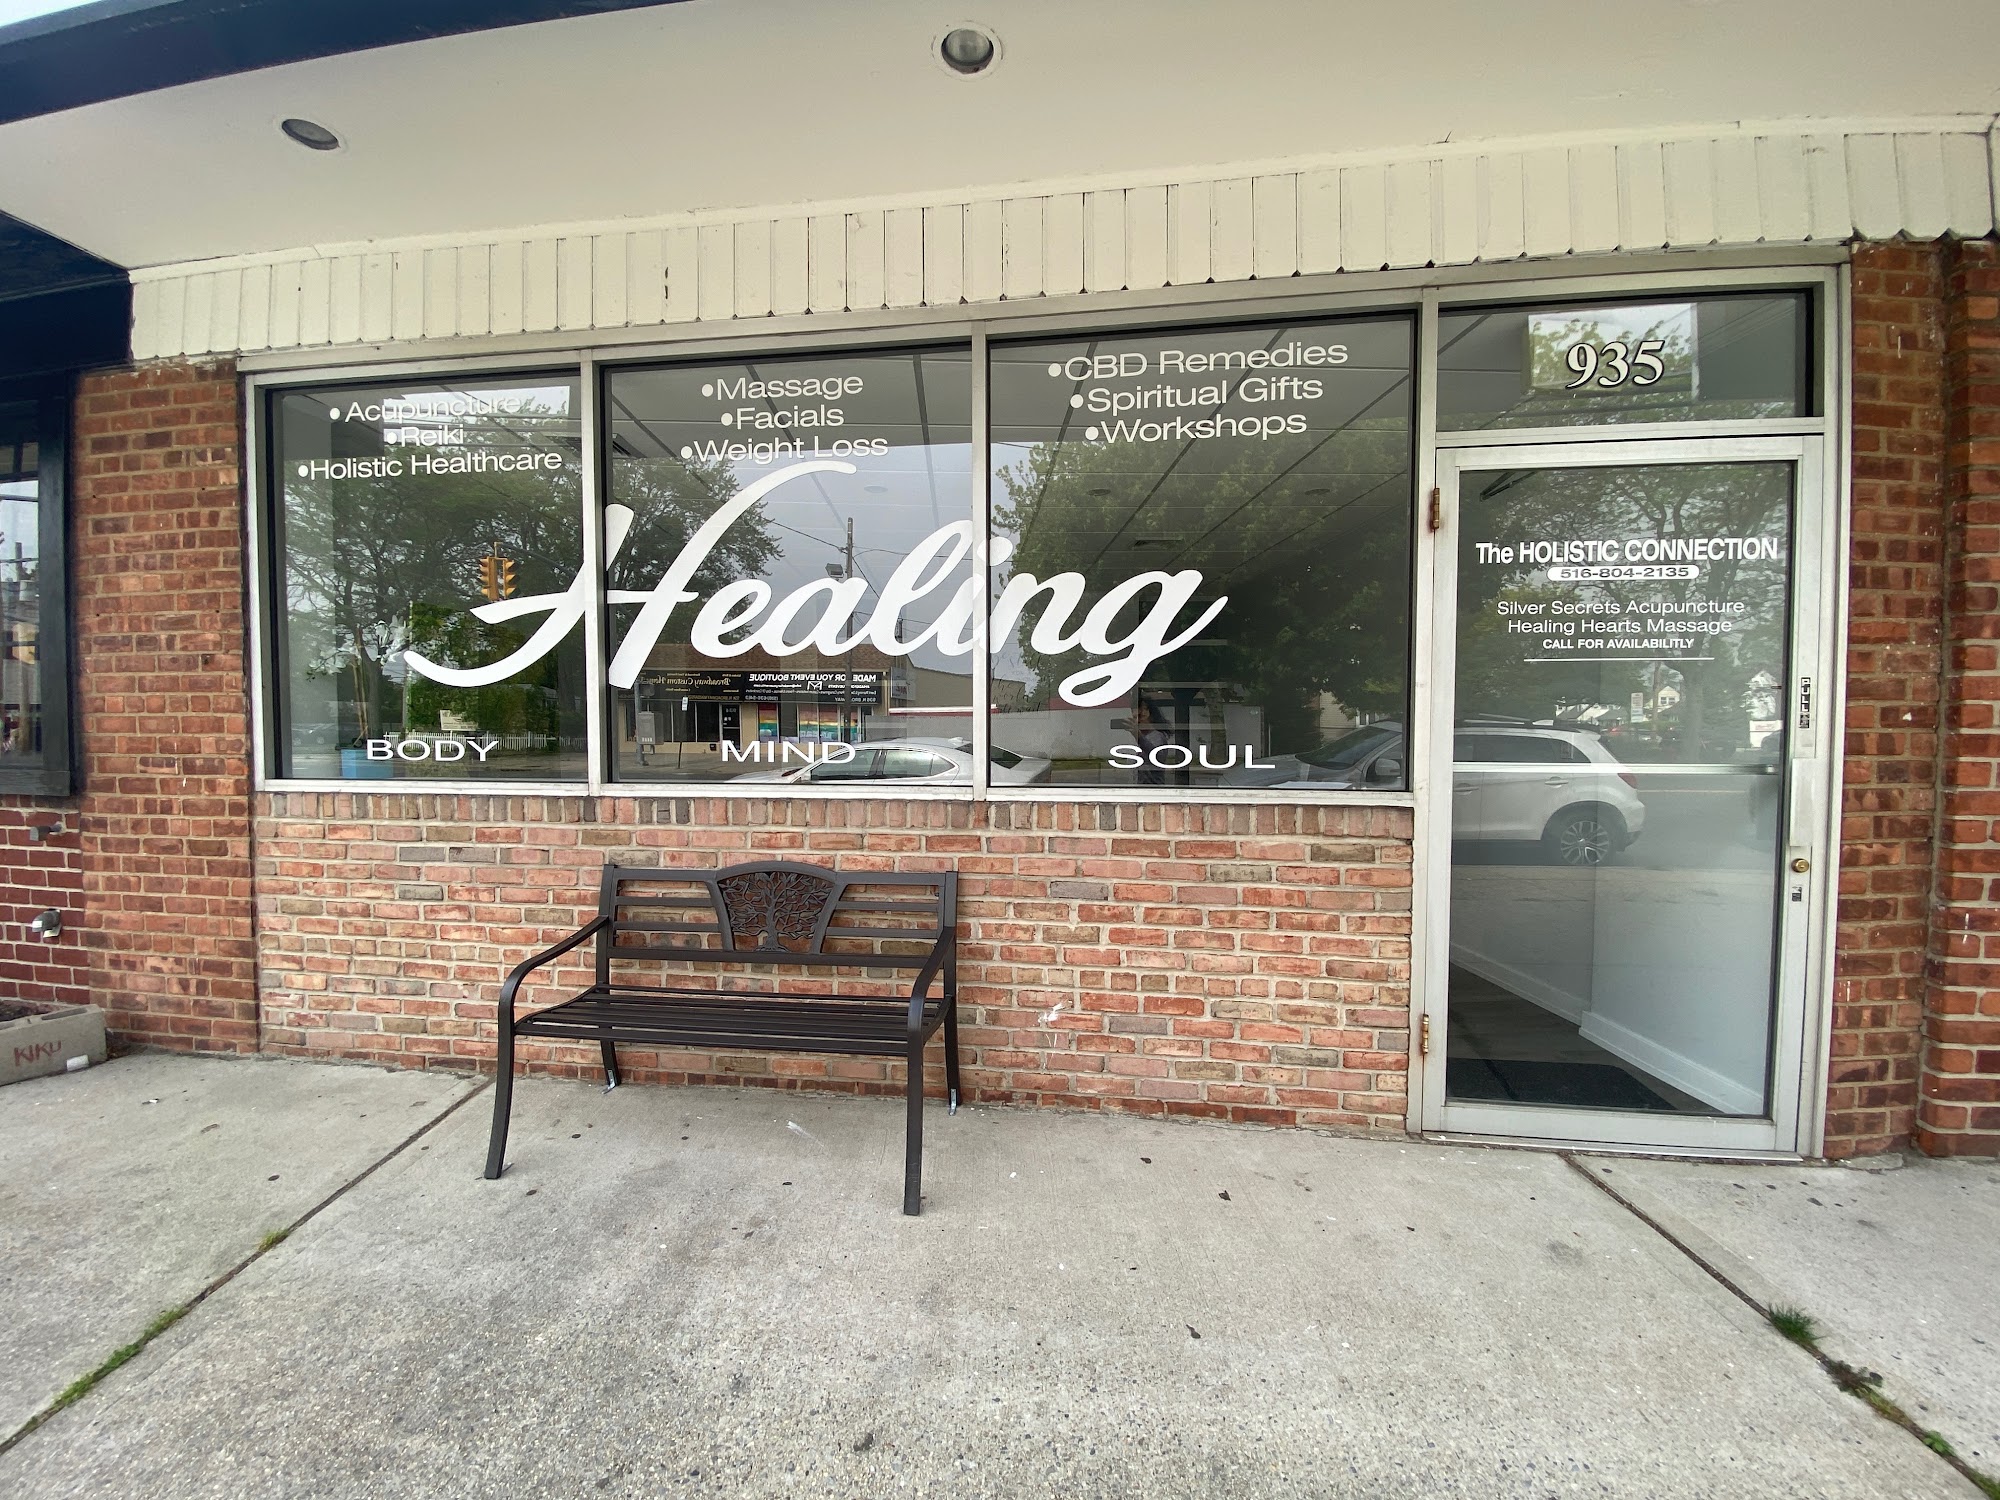 Healing Hearts Holistic Wellness & Metaphysical Shop 935 N Broadway, North Massapequa New York 11758